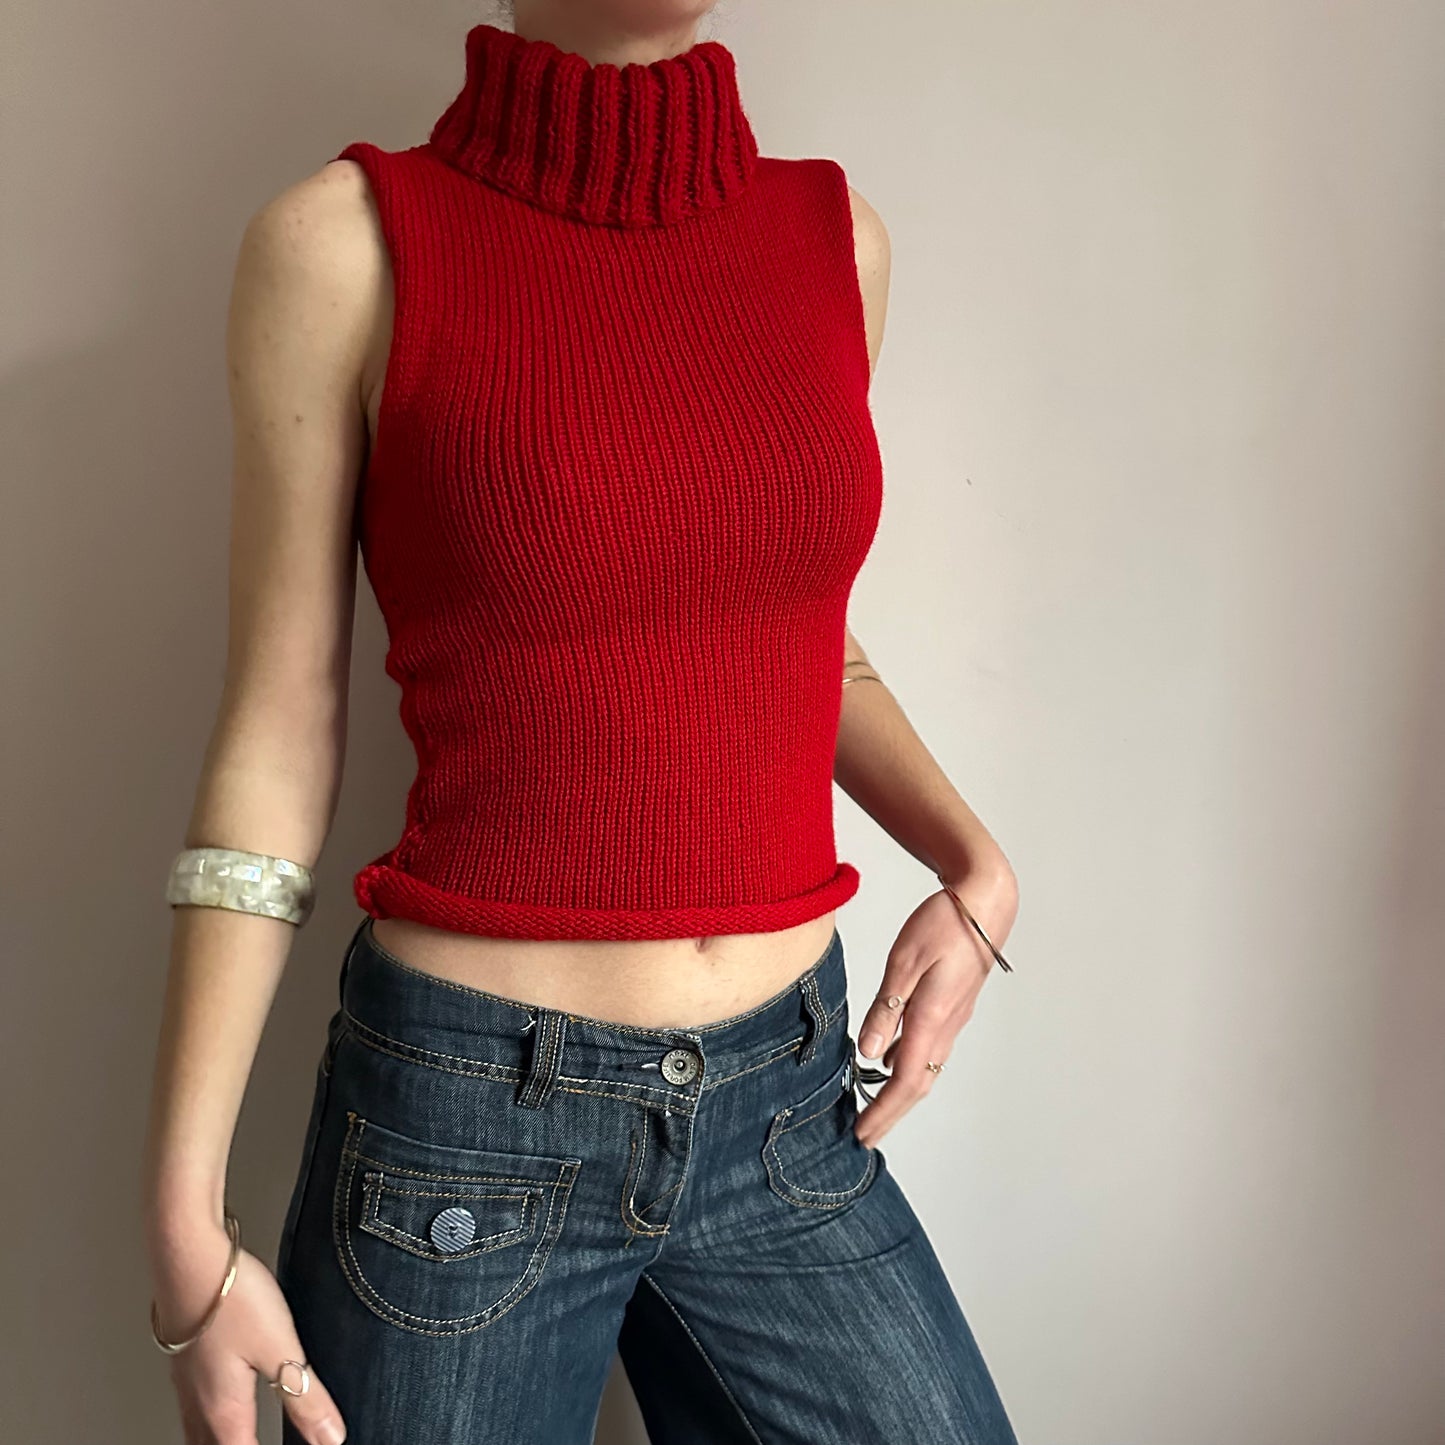 Handmade dark red turtleneck knit vest